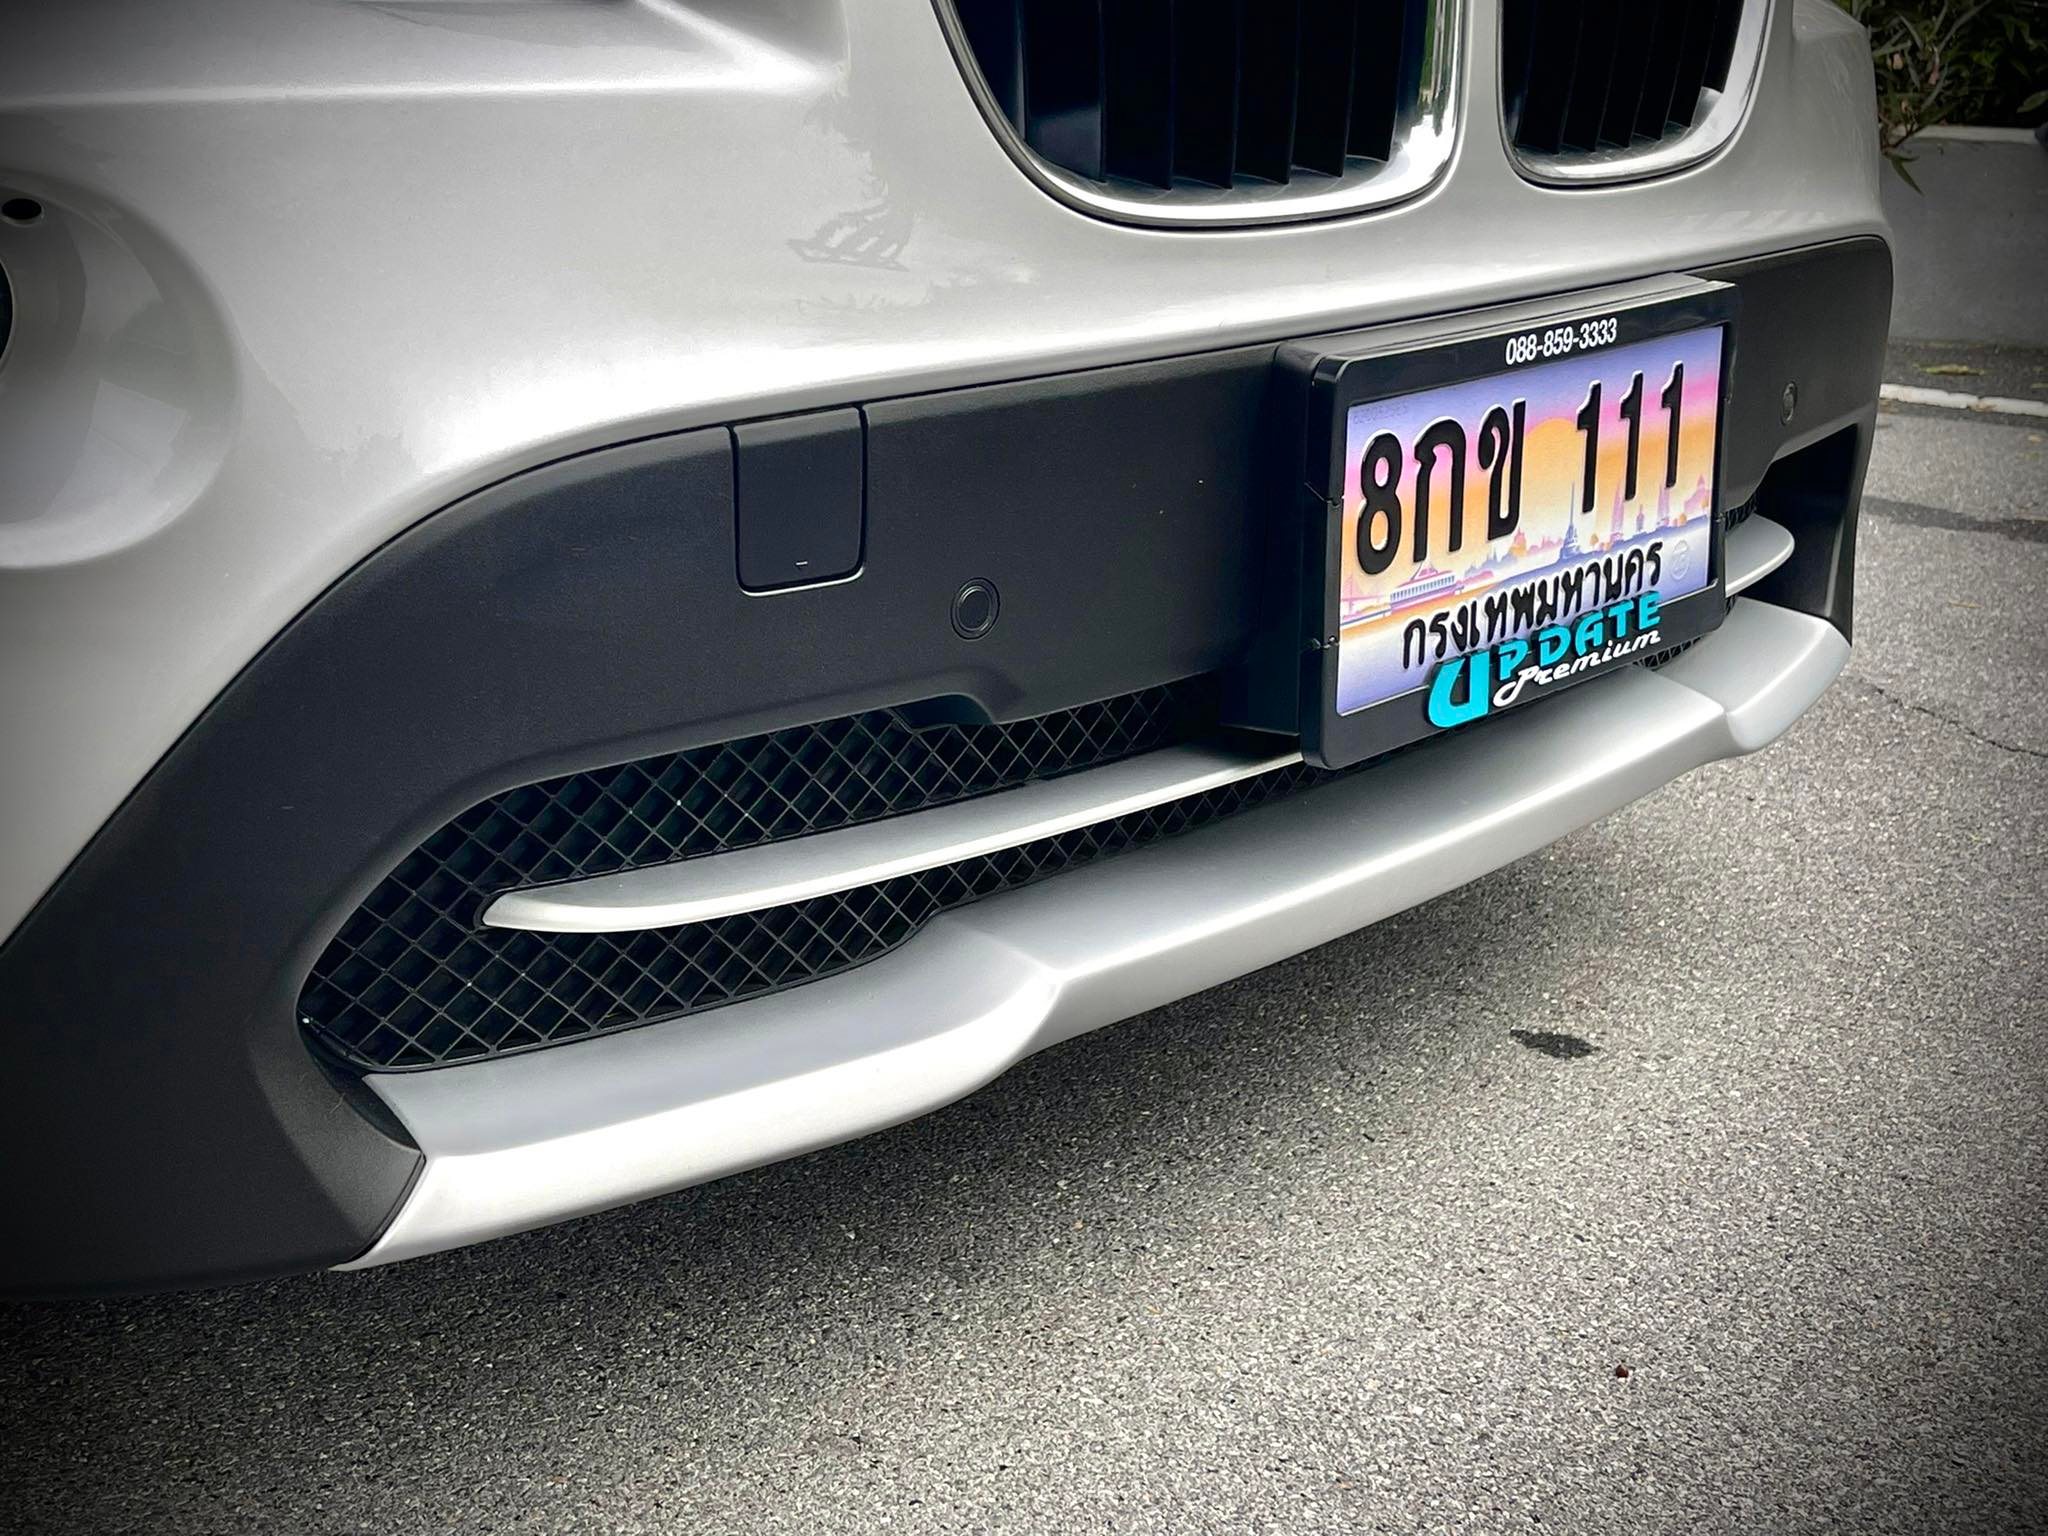 BMW X1 2.0 HighLine สวยในทุกทุก มุมมอง